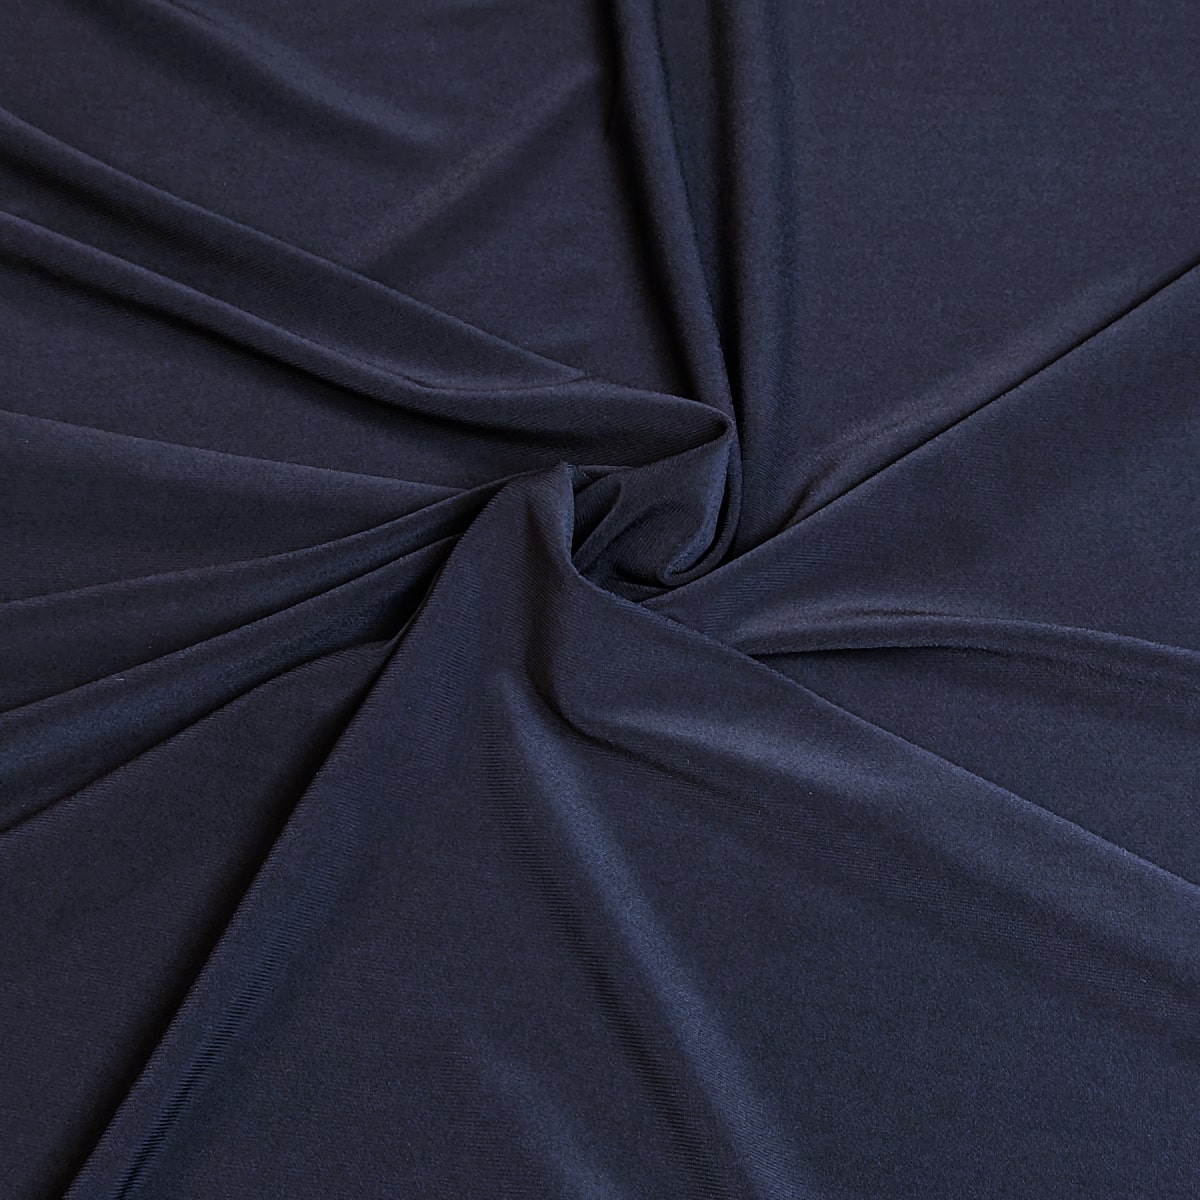  ITY Fabric Polyester Lycra Knit Jersey 2 Way Spandex Stretch  58 Wide by The Yard (1 Yard, Black)